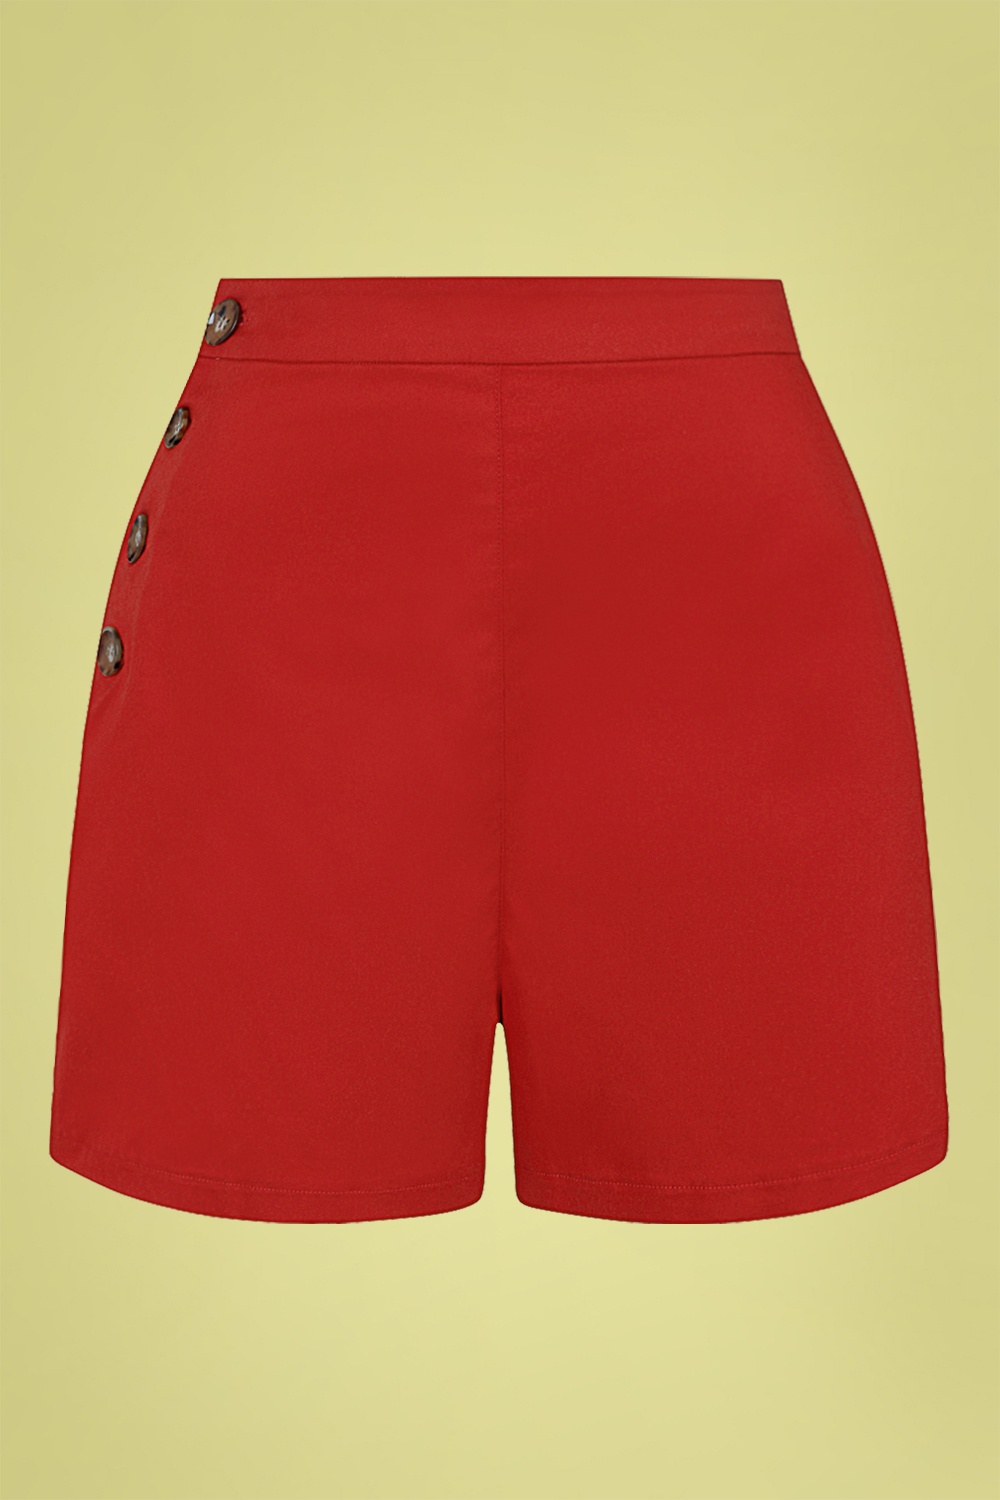 Collectif Clothing - Adriana korte broek in rood 2